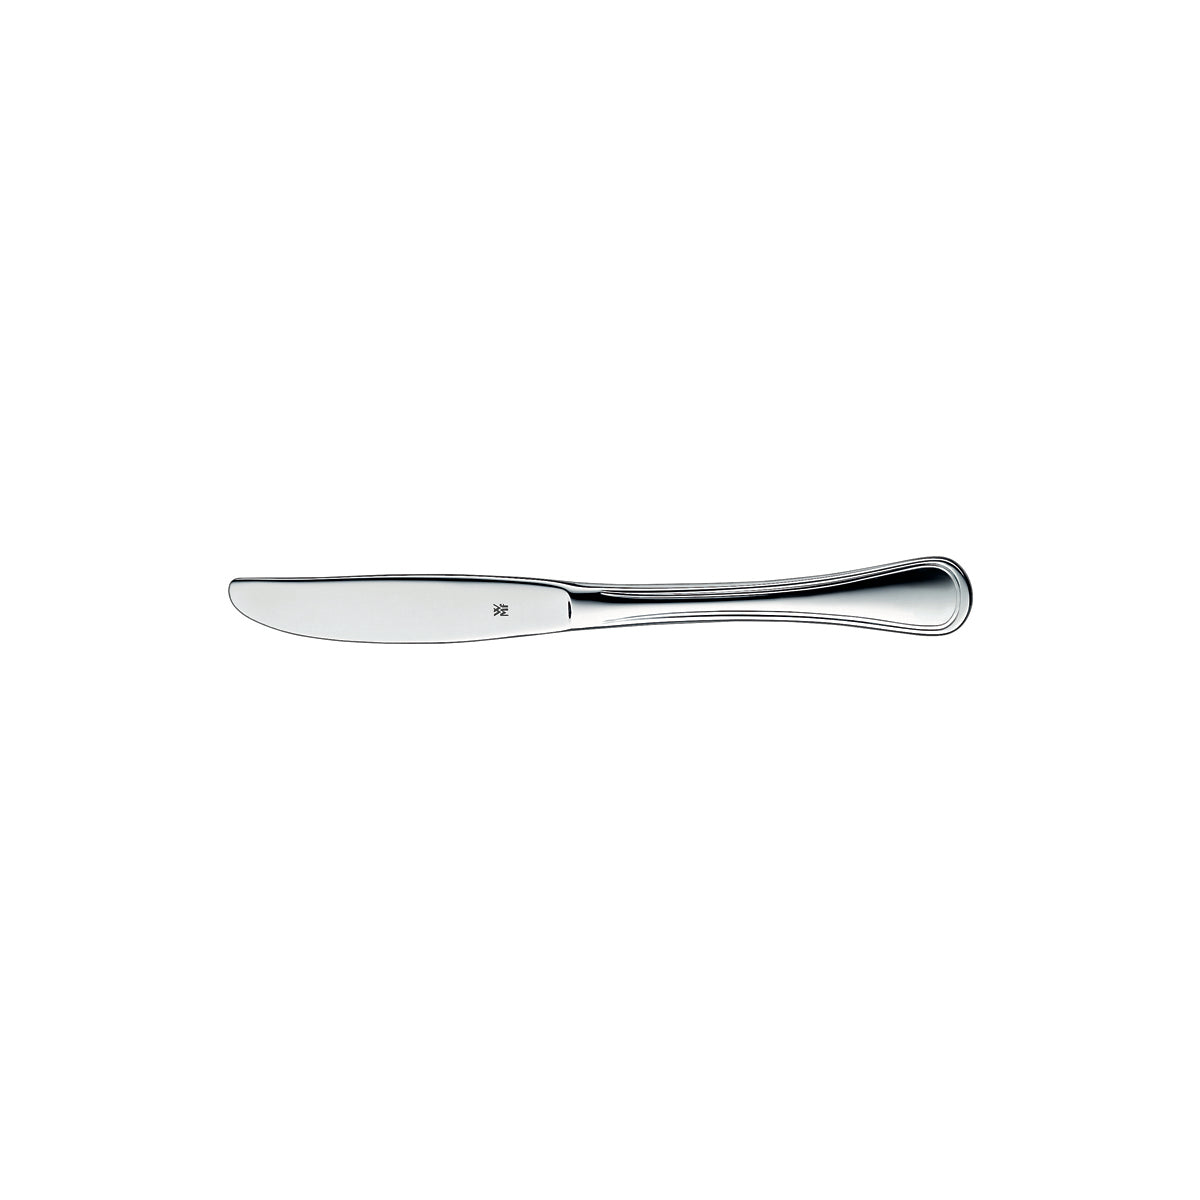 10.0203.6069 WMF Contour Table Knife Silverplated Tomkin Australia Hospitality Supplies